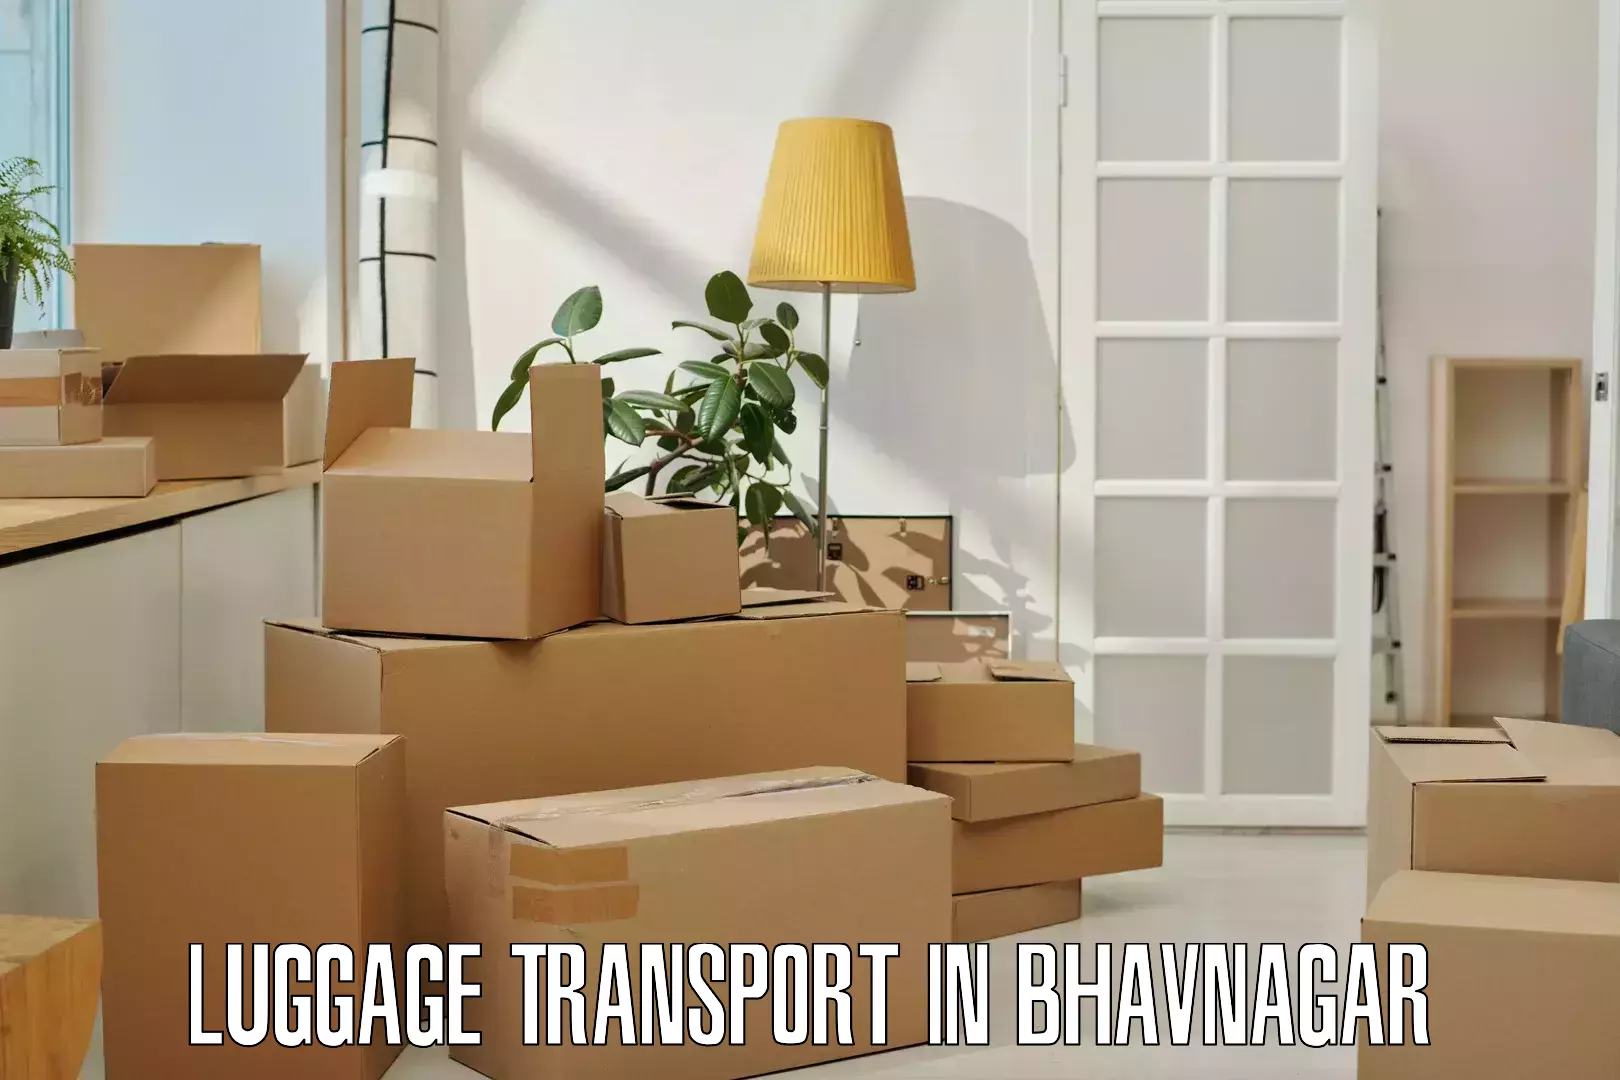 Urgent luggage shipment in Bhavnagar